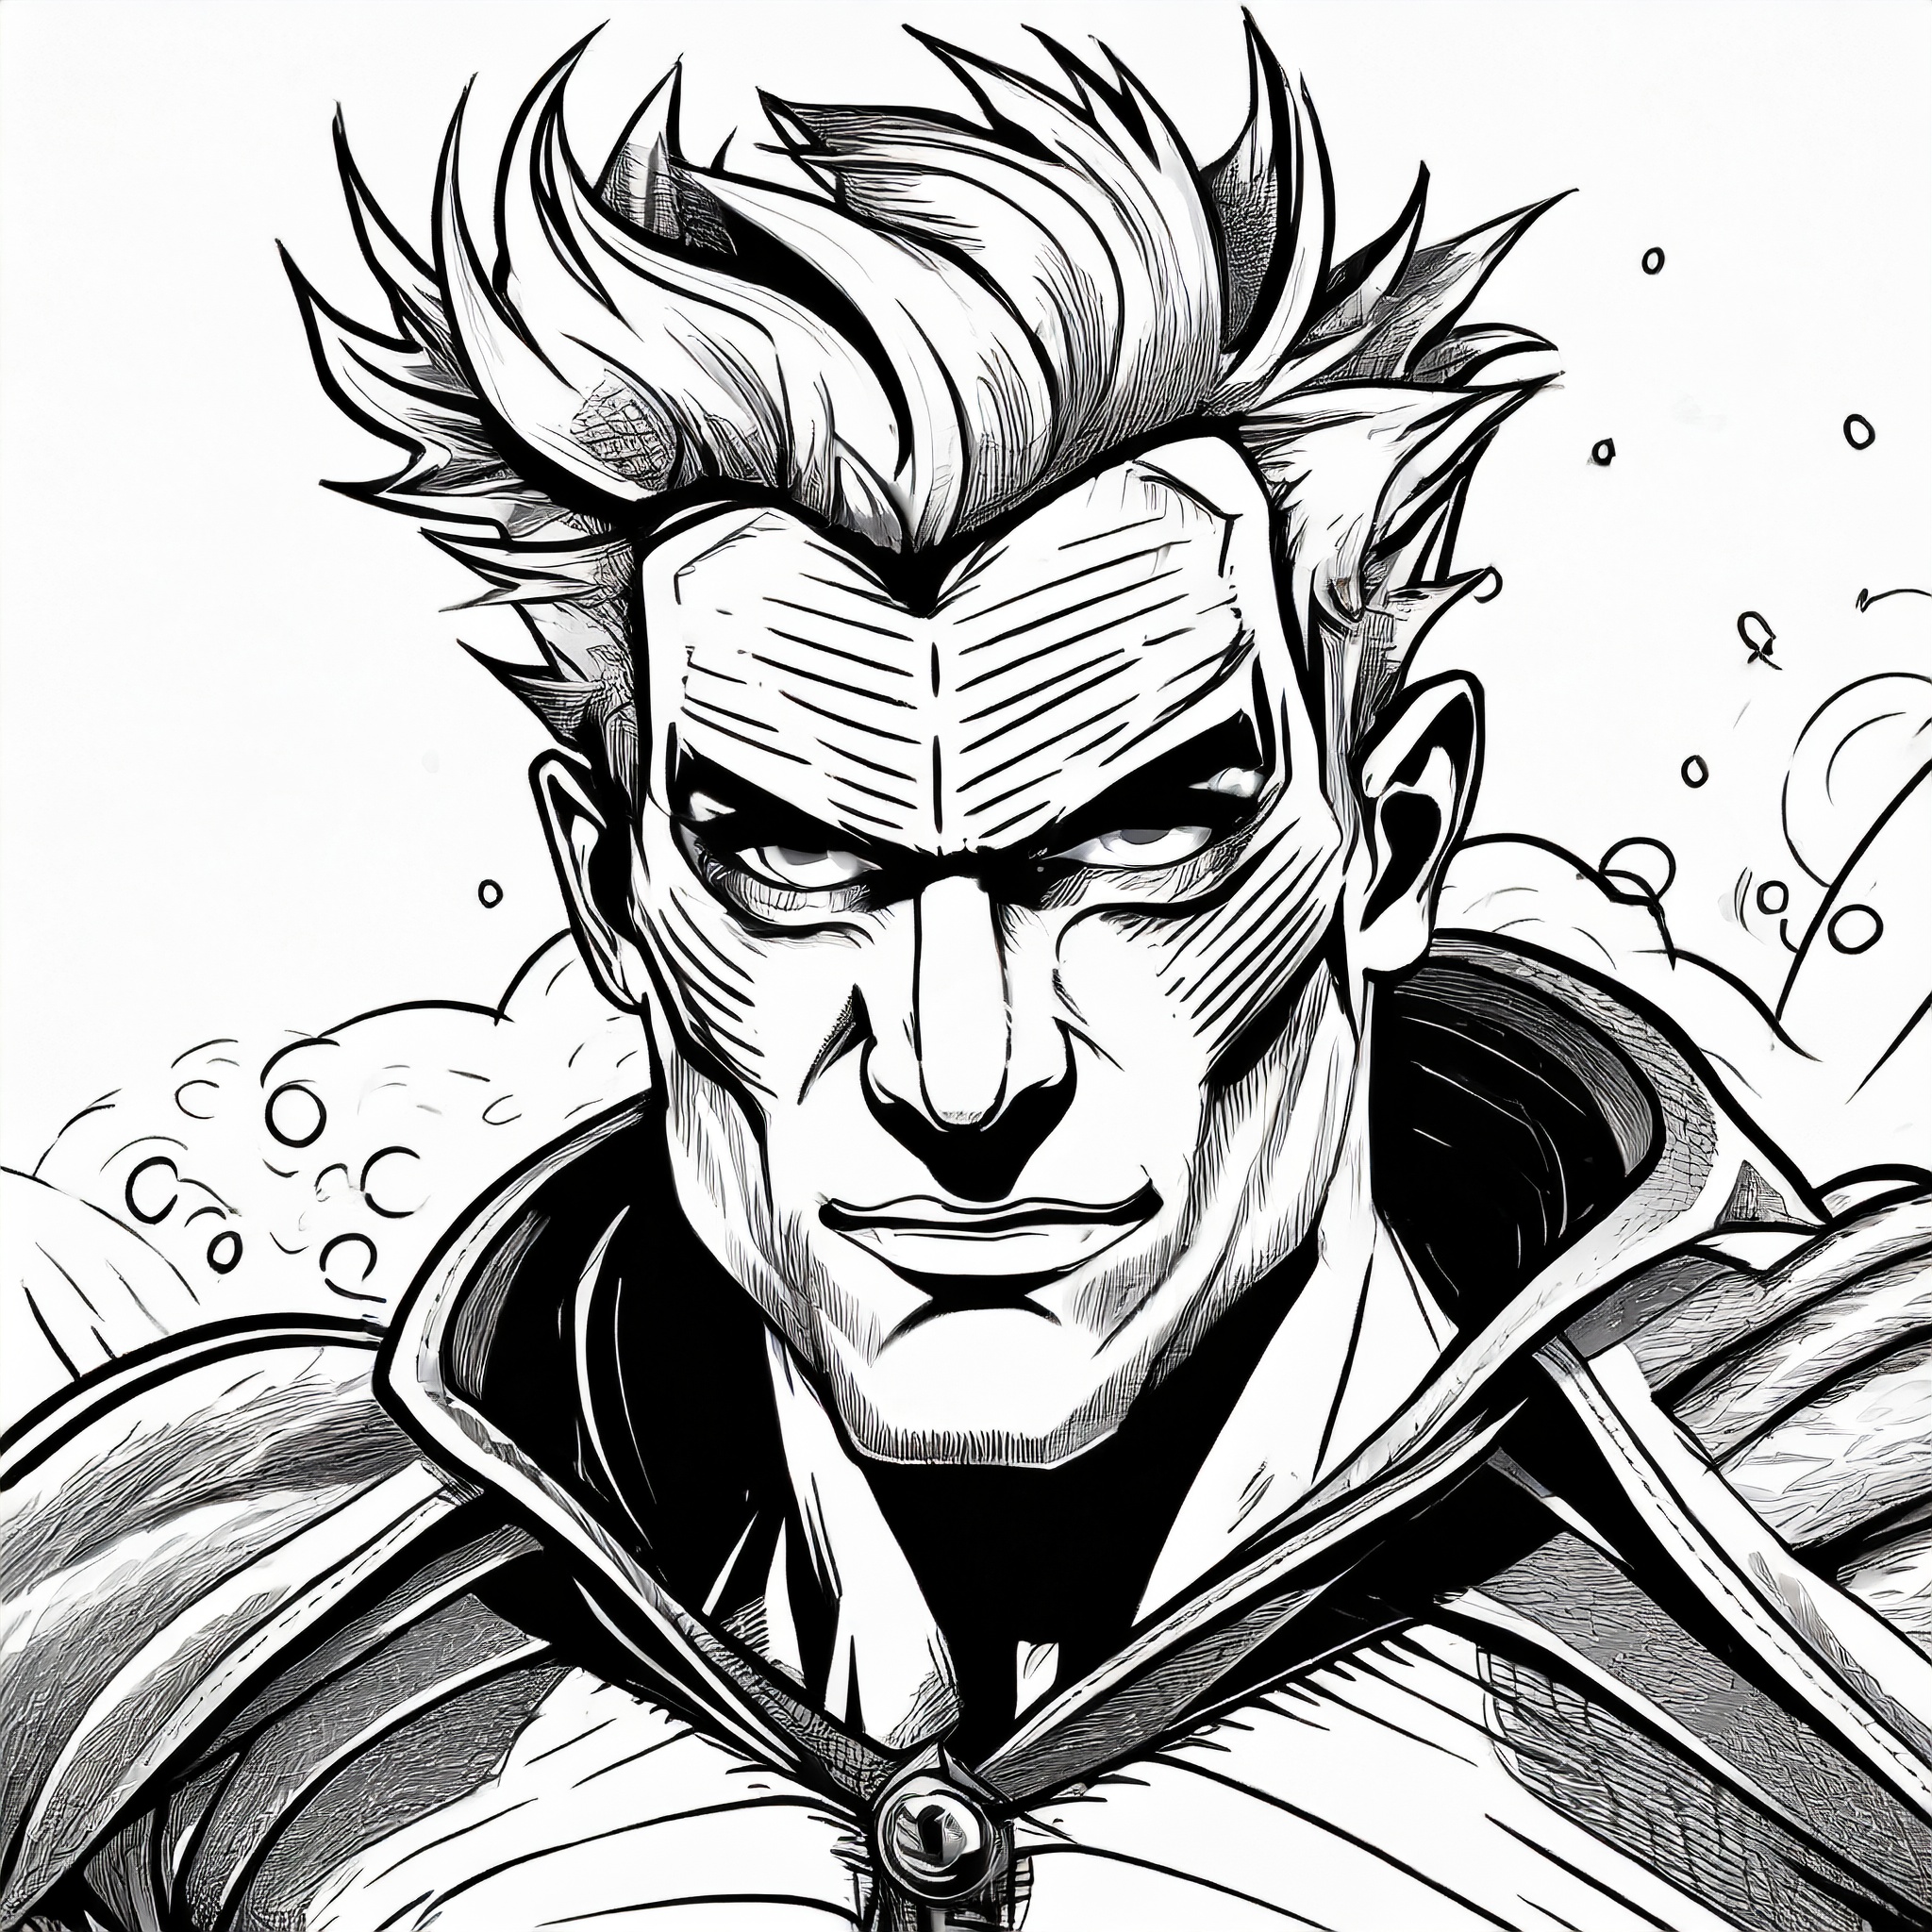 https://www.artinstructionblog.com/wp-content/uploads/2019/08/Firefly-comic-book-character-super-hero-black-and-white-pen-drawing-37407.jpg